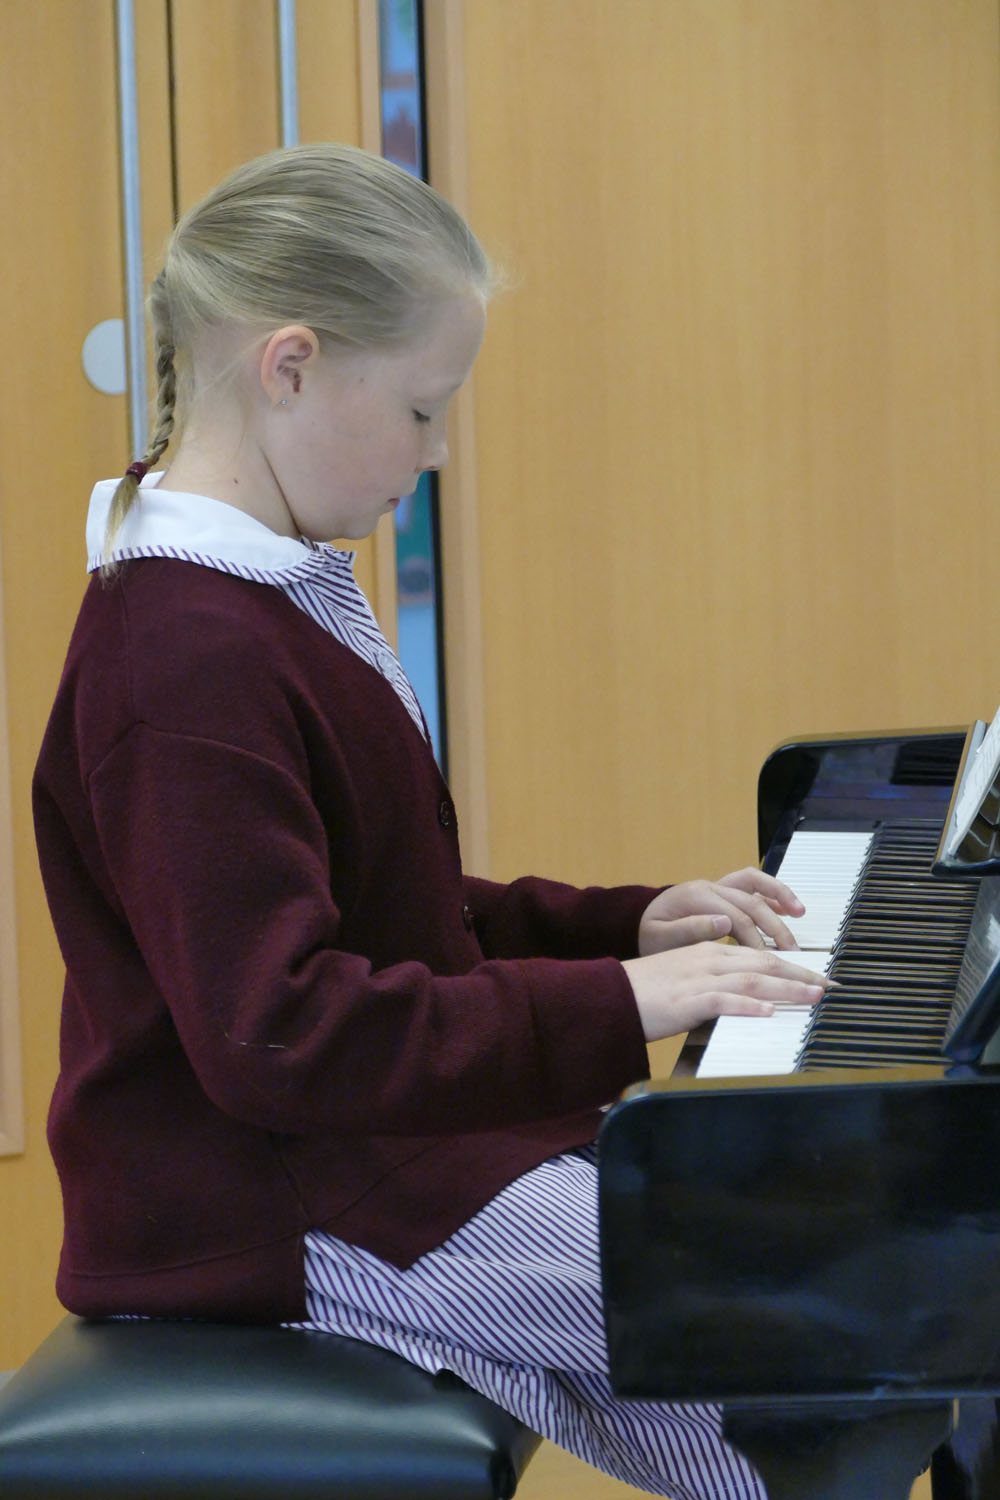 Junior Piano Recital, 14th June 2016